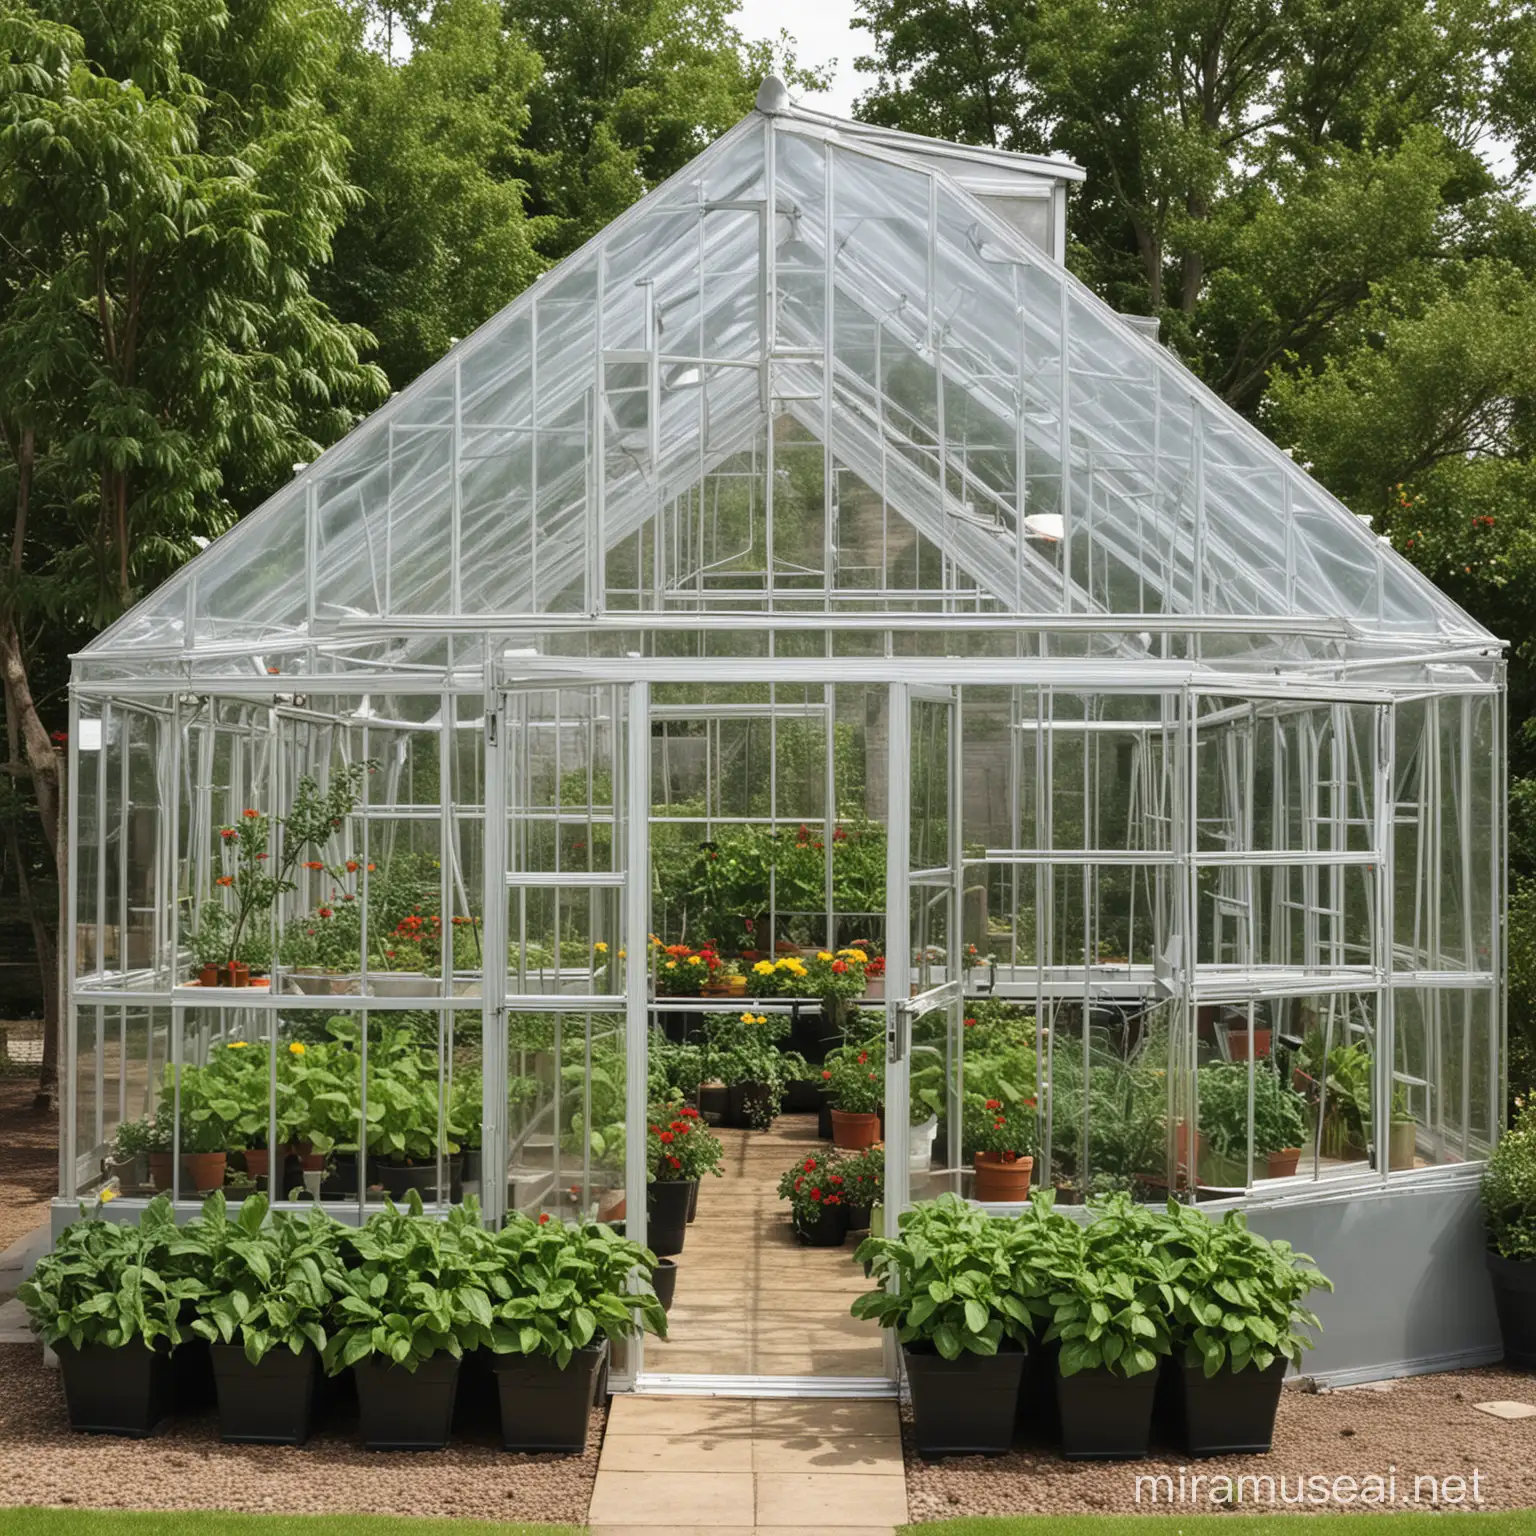 inovative greenhouse ideas